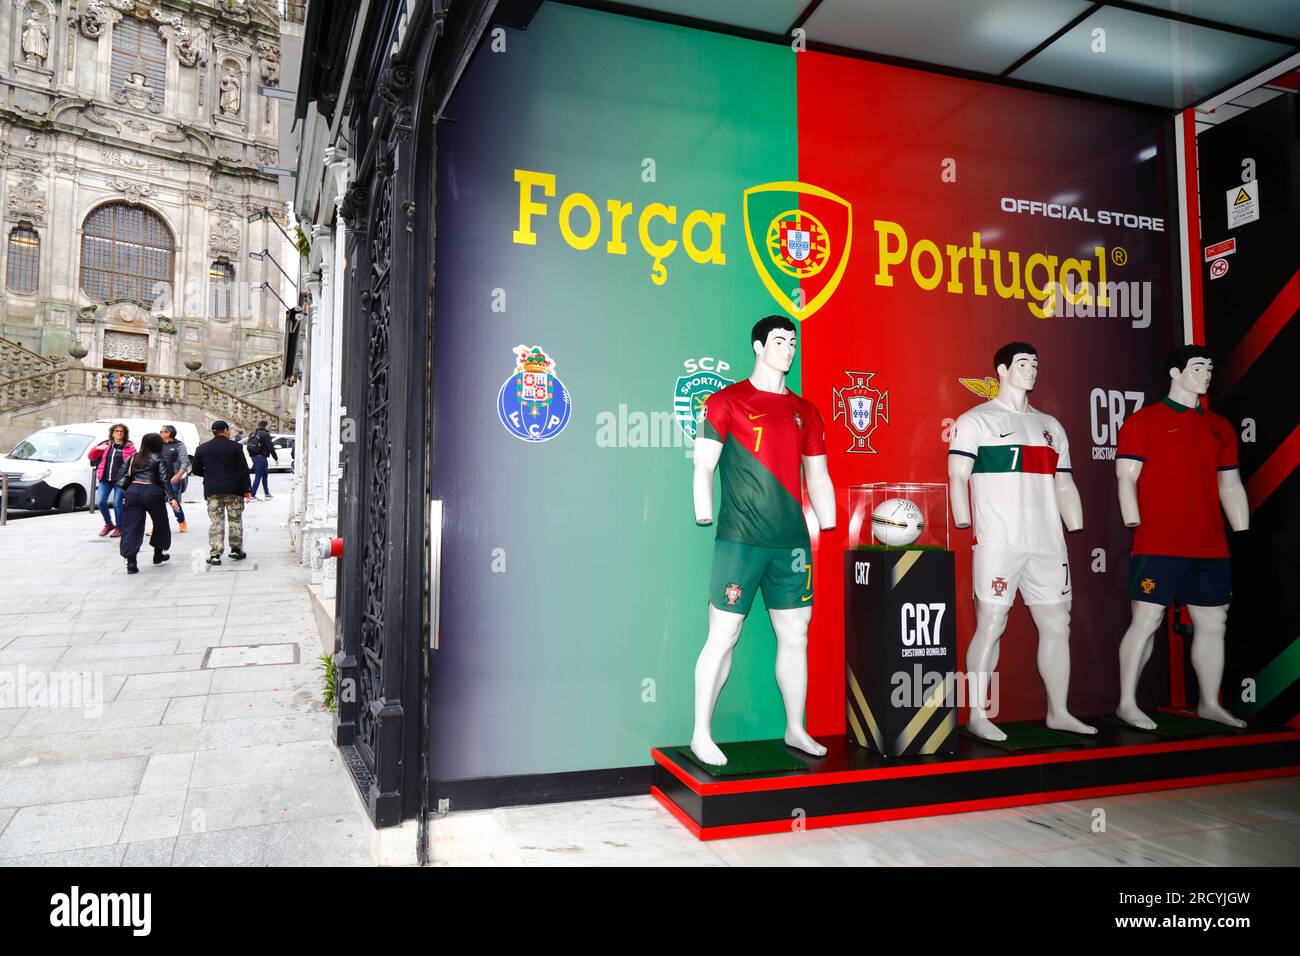 Mannequins of famous Portuguese footballer Cristiano Ronaldo in Força Portugal offical store, Porto / Oporto, Portugal Stock Photo